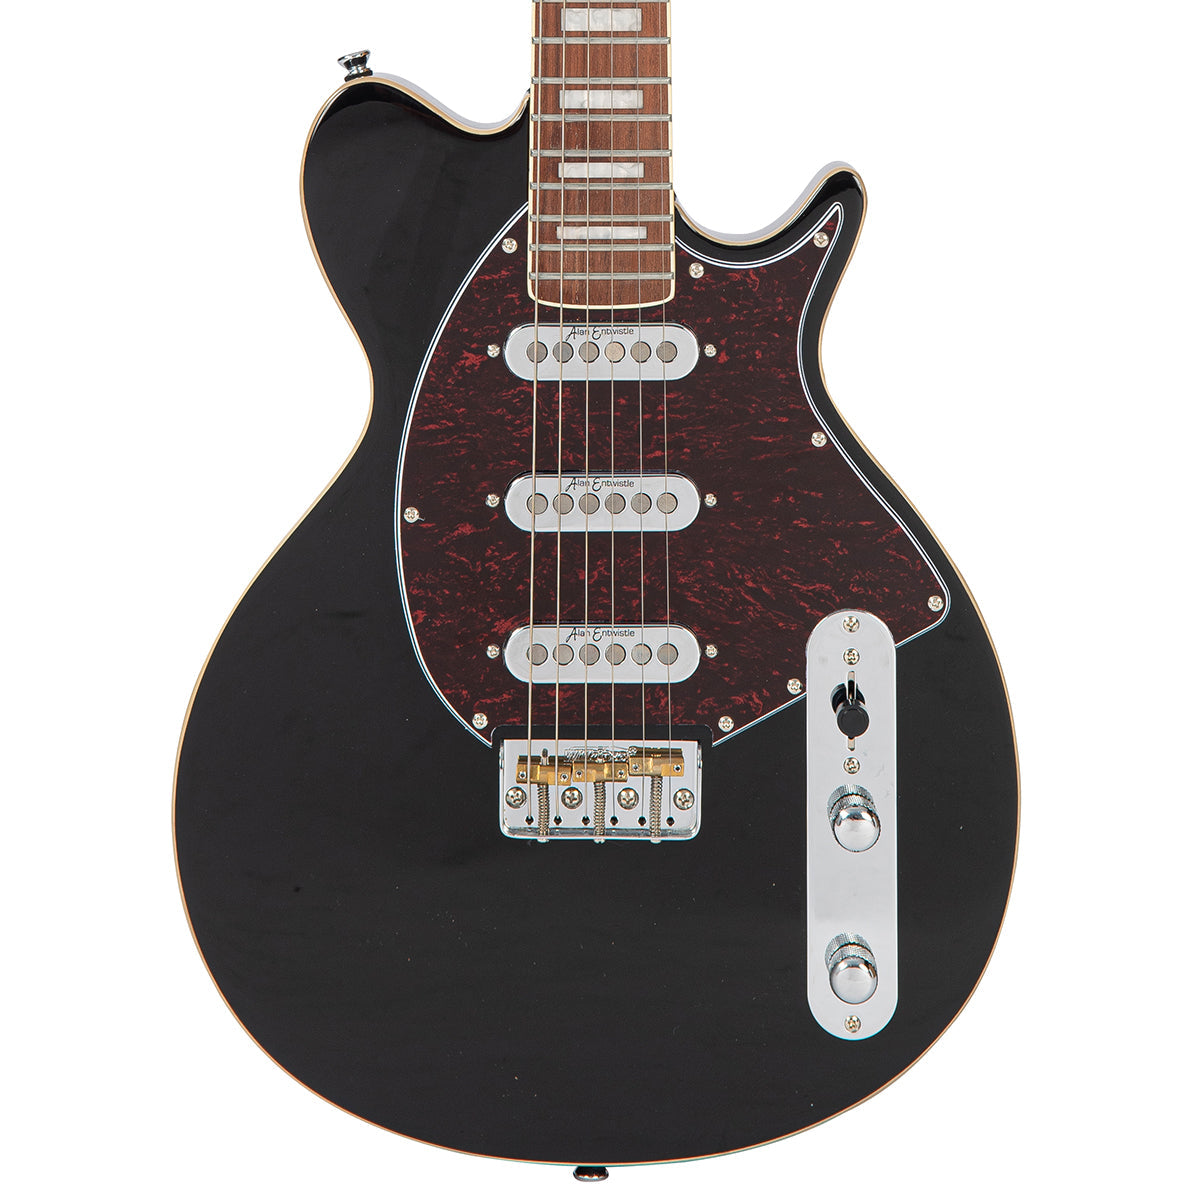 Vintage REVO Series 'Vision' Electric Guitar ~ Boulevard Black, Electric Guitars for sale at Richards Guitars.